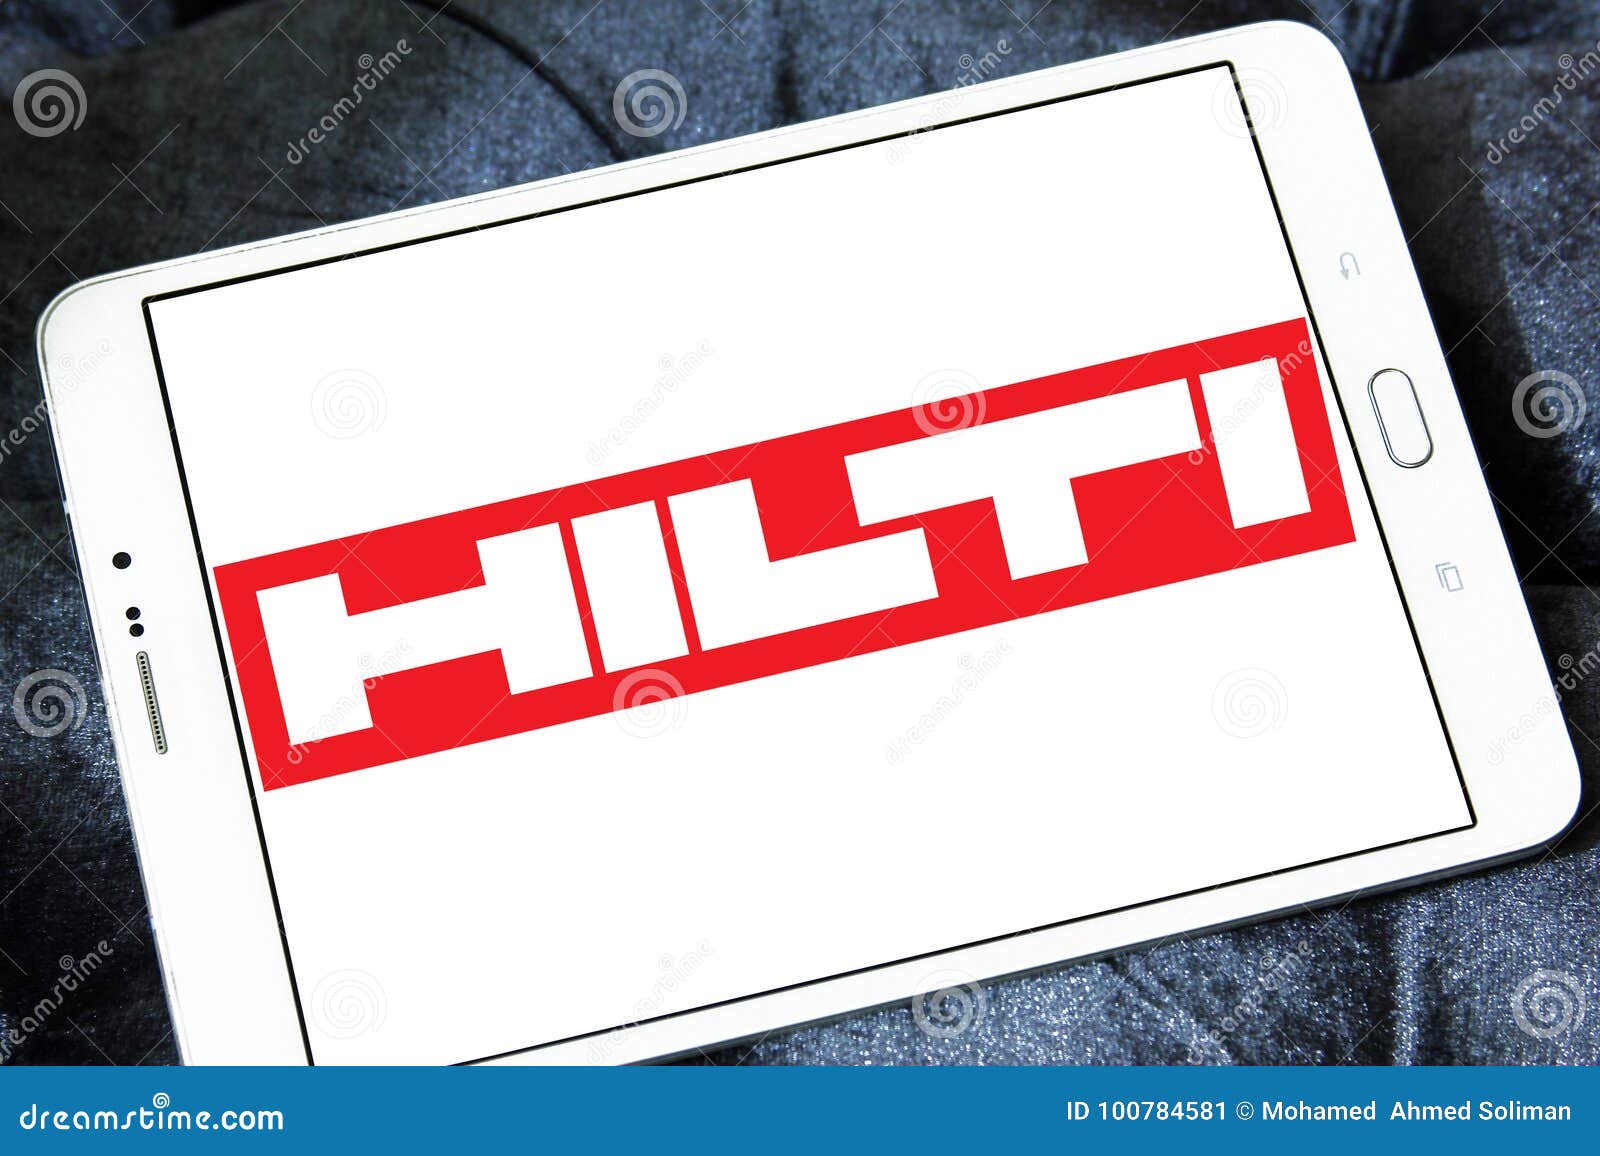 Hilti company logo editorial photo. Image of decker - 100784581